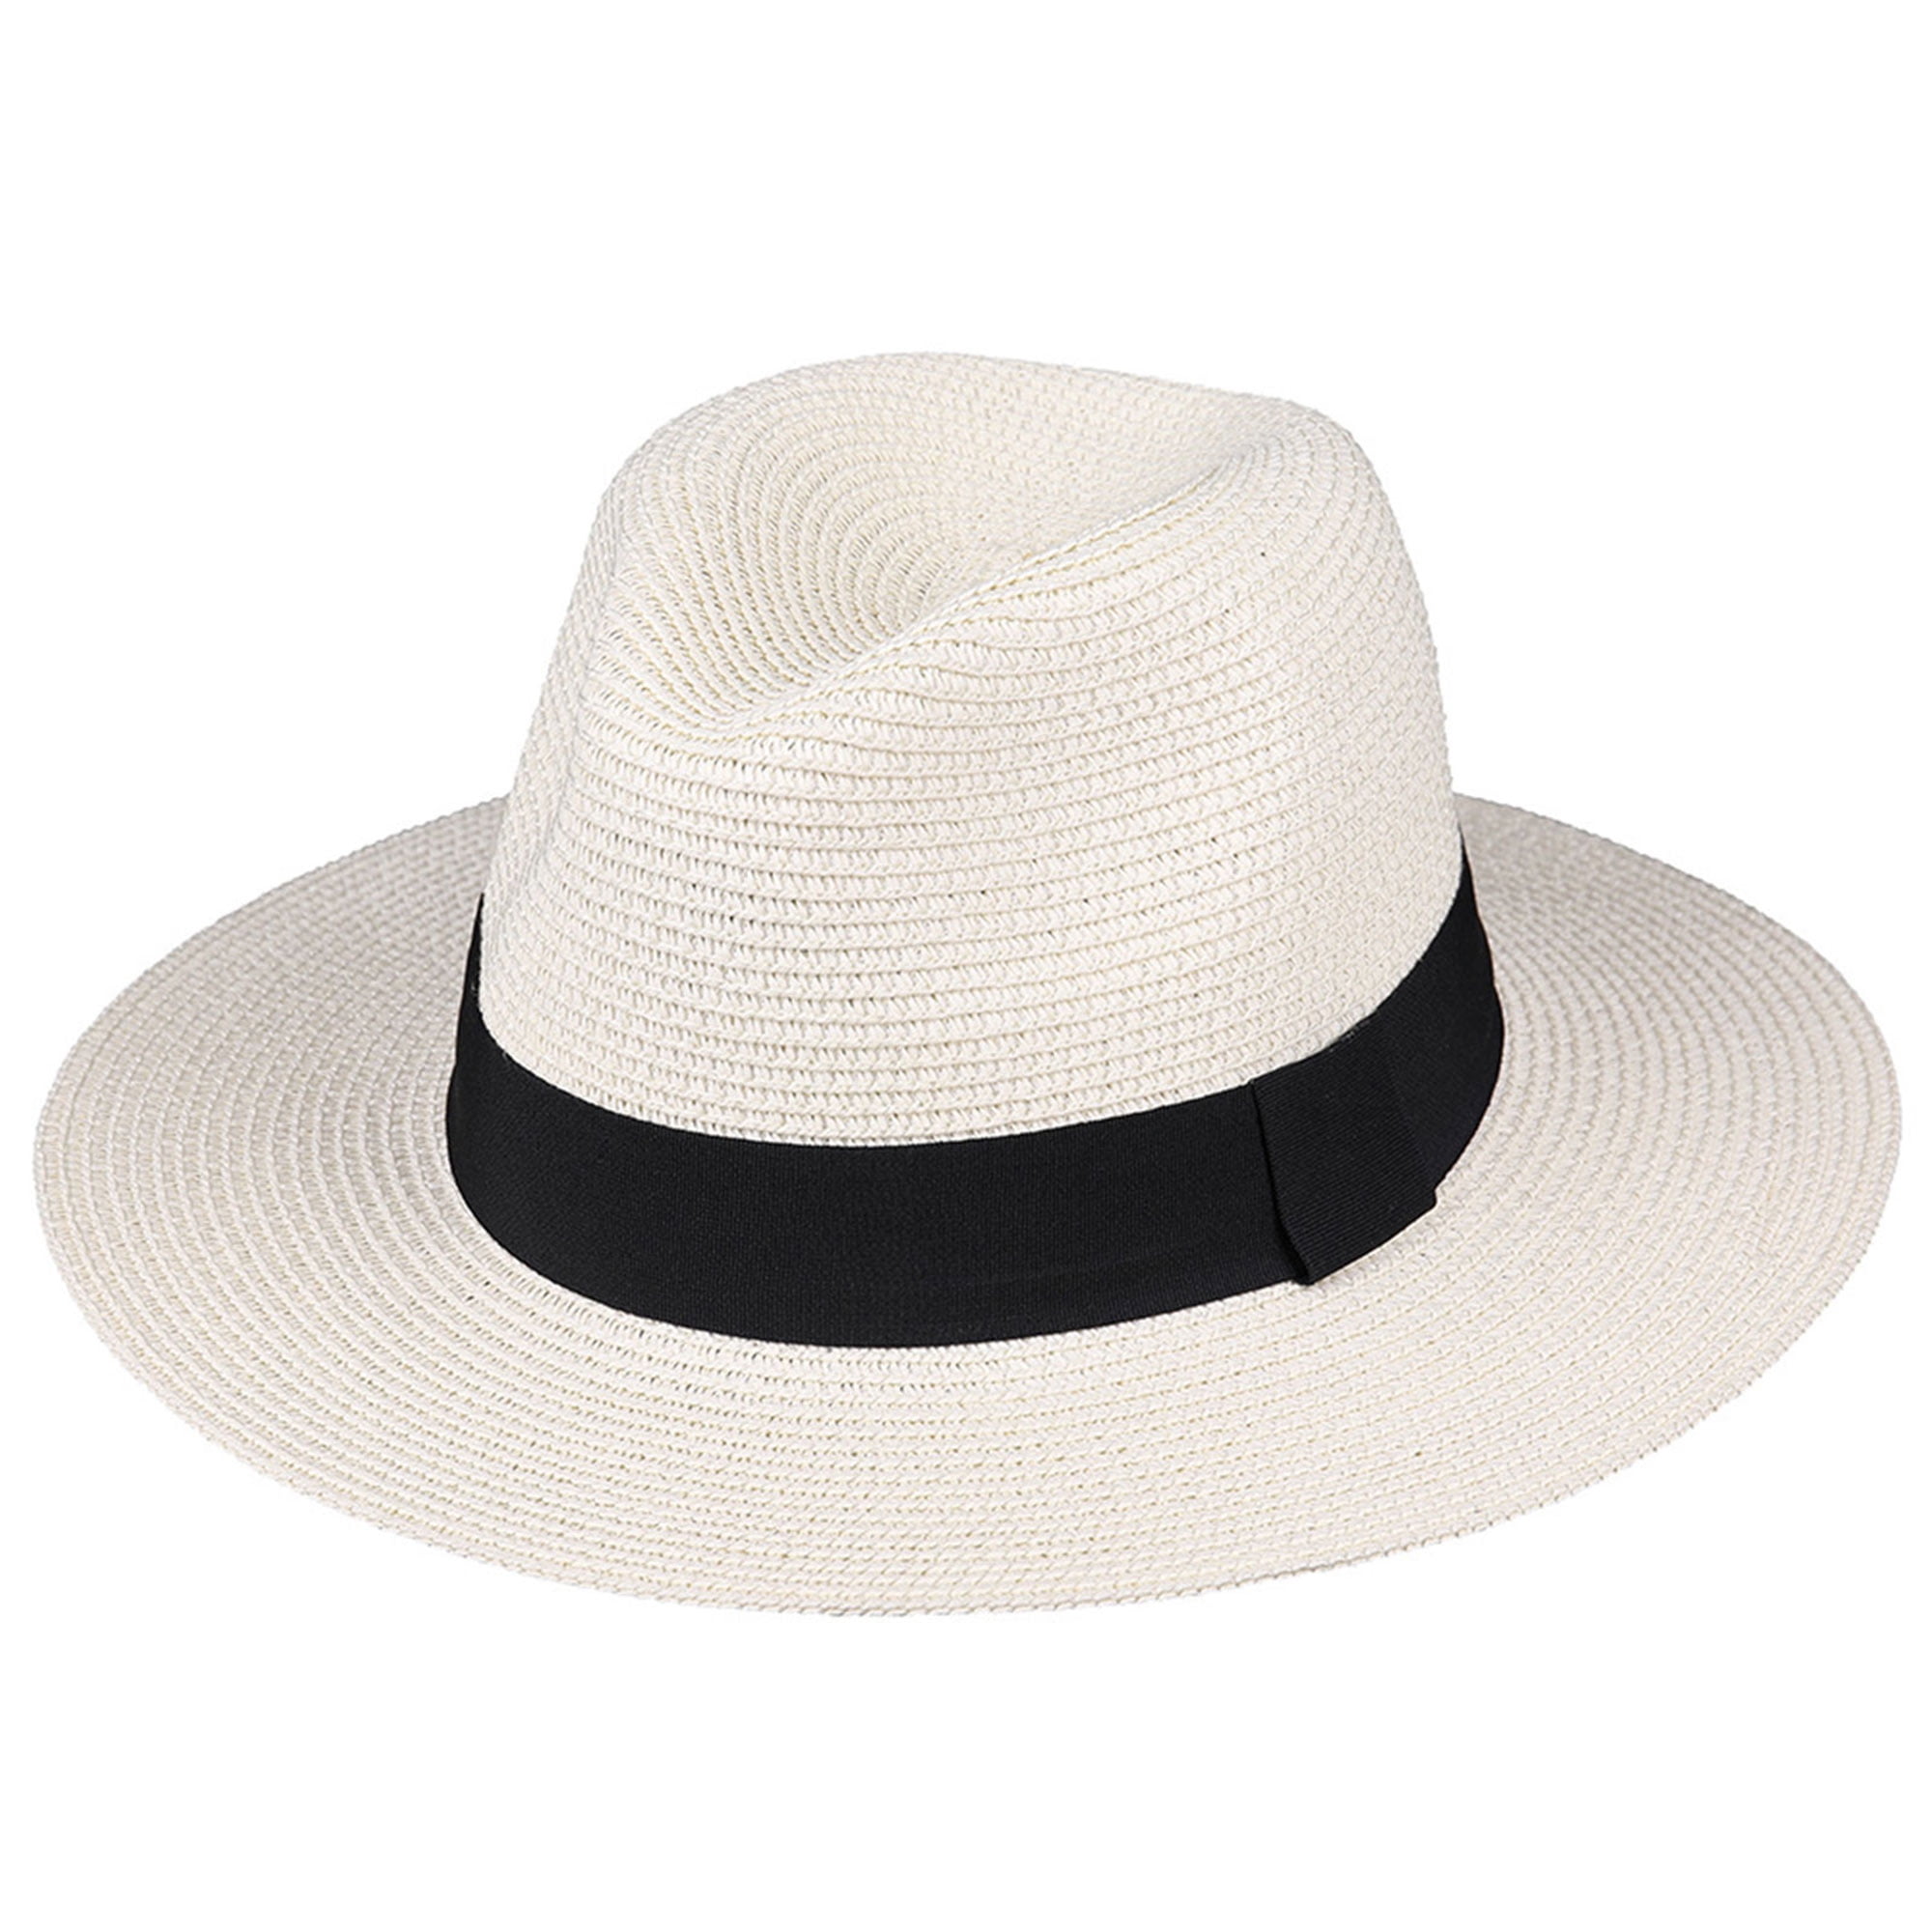 Faletony Straw Fedora Hat Classic Panama Hat Beach Sun Hats for Women Men 